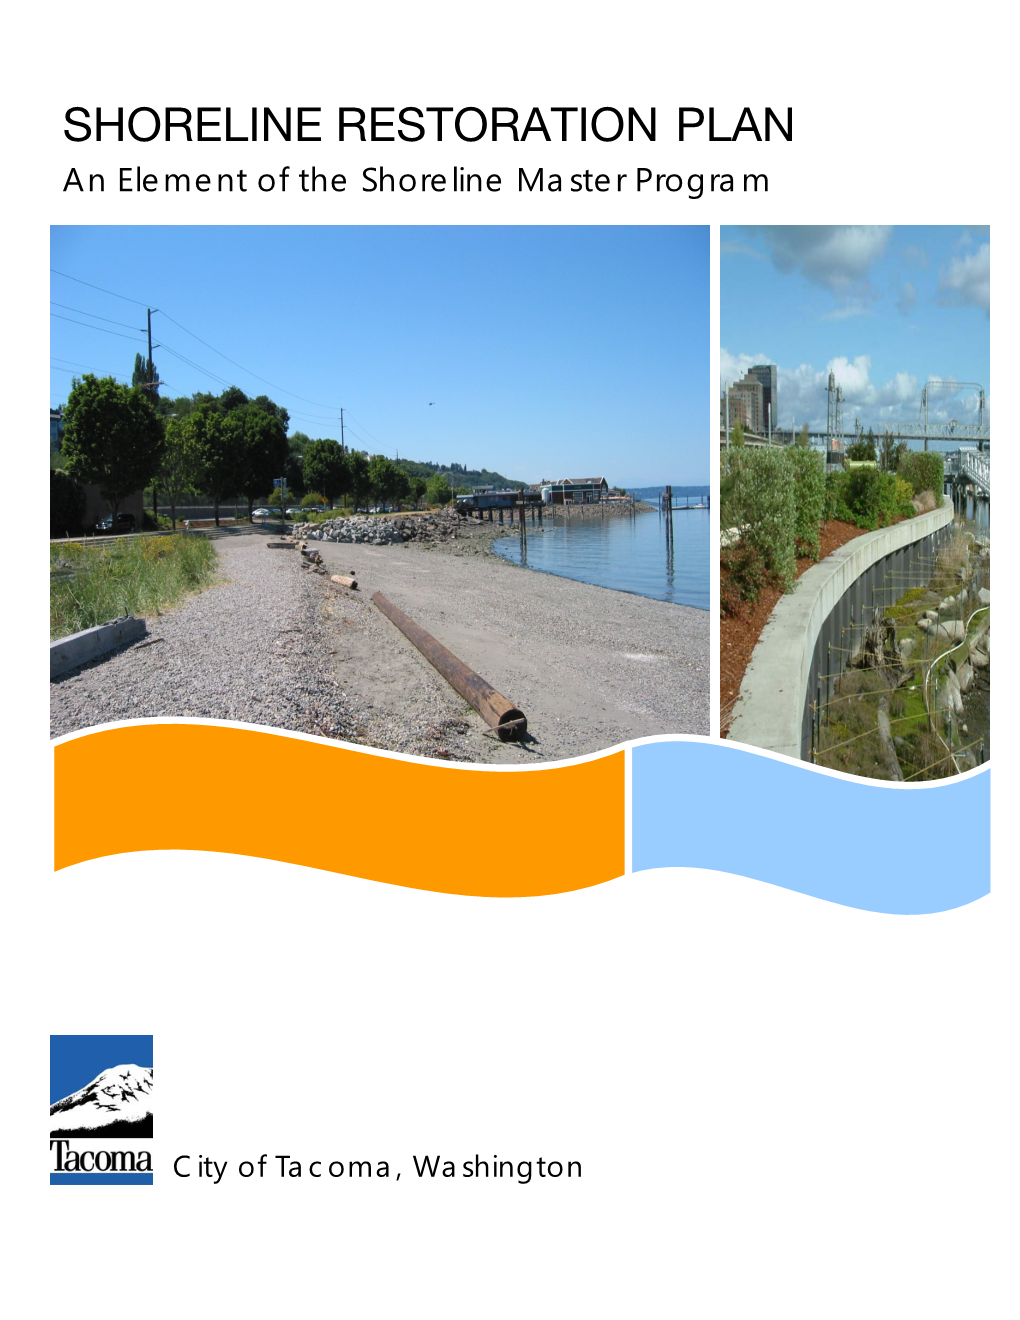 Shoreline Restoration Plan